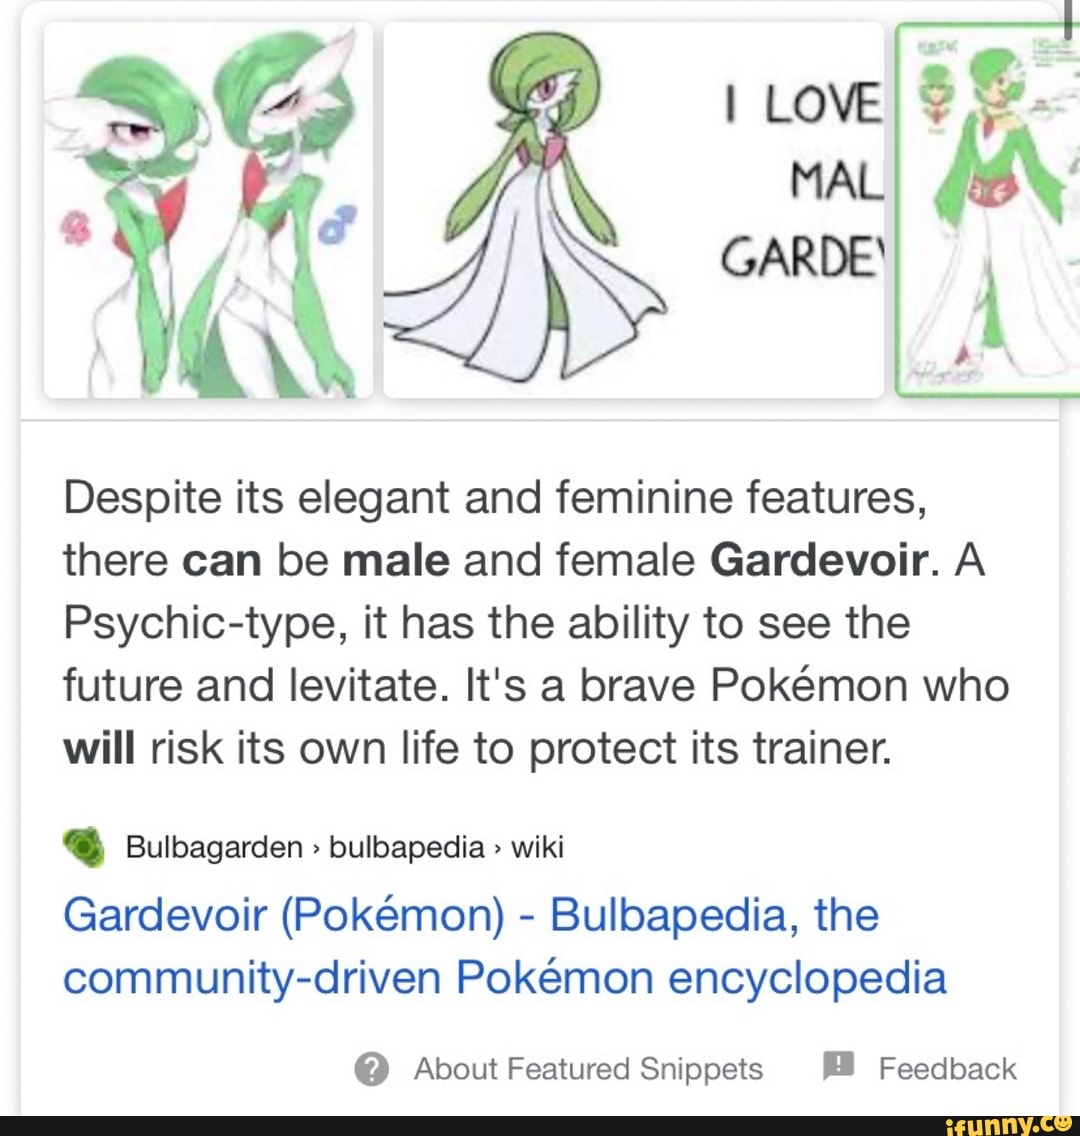 Gardevoir (Pokémon) - Bulbapedia, the community-driven Pokémon